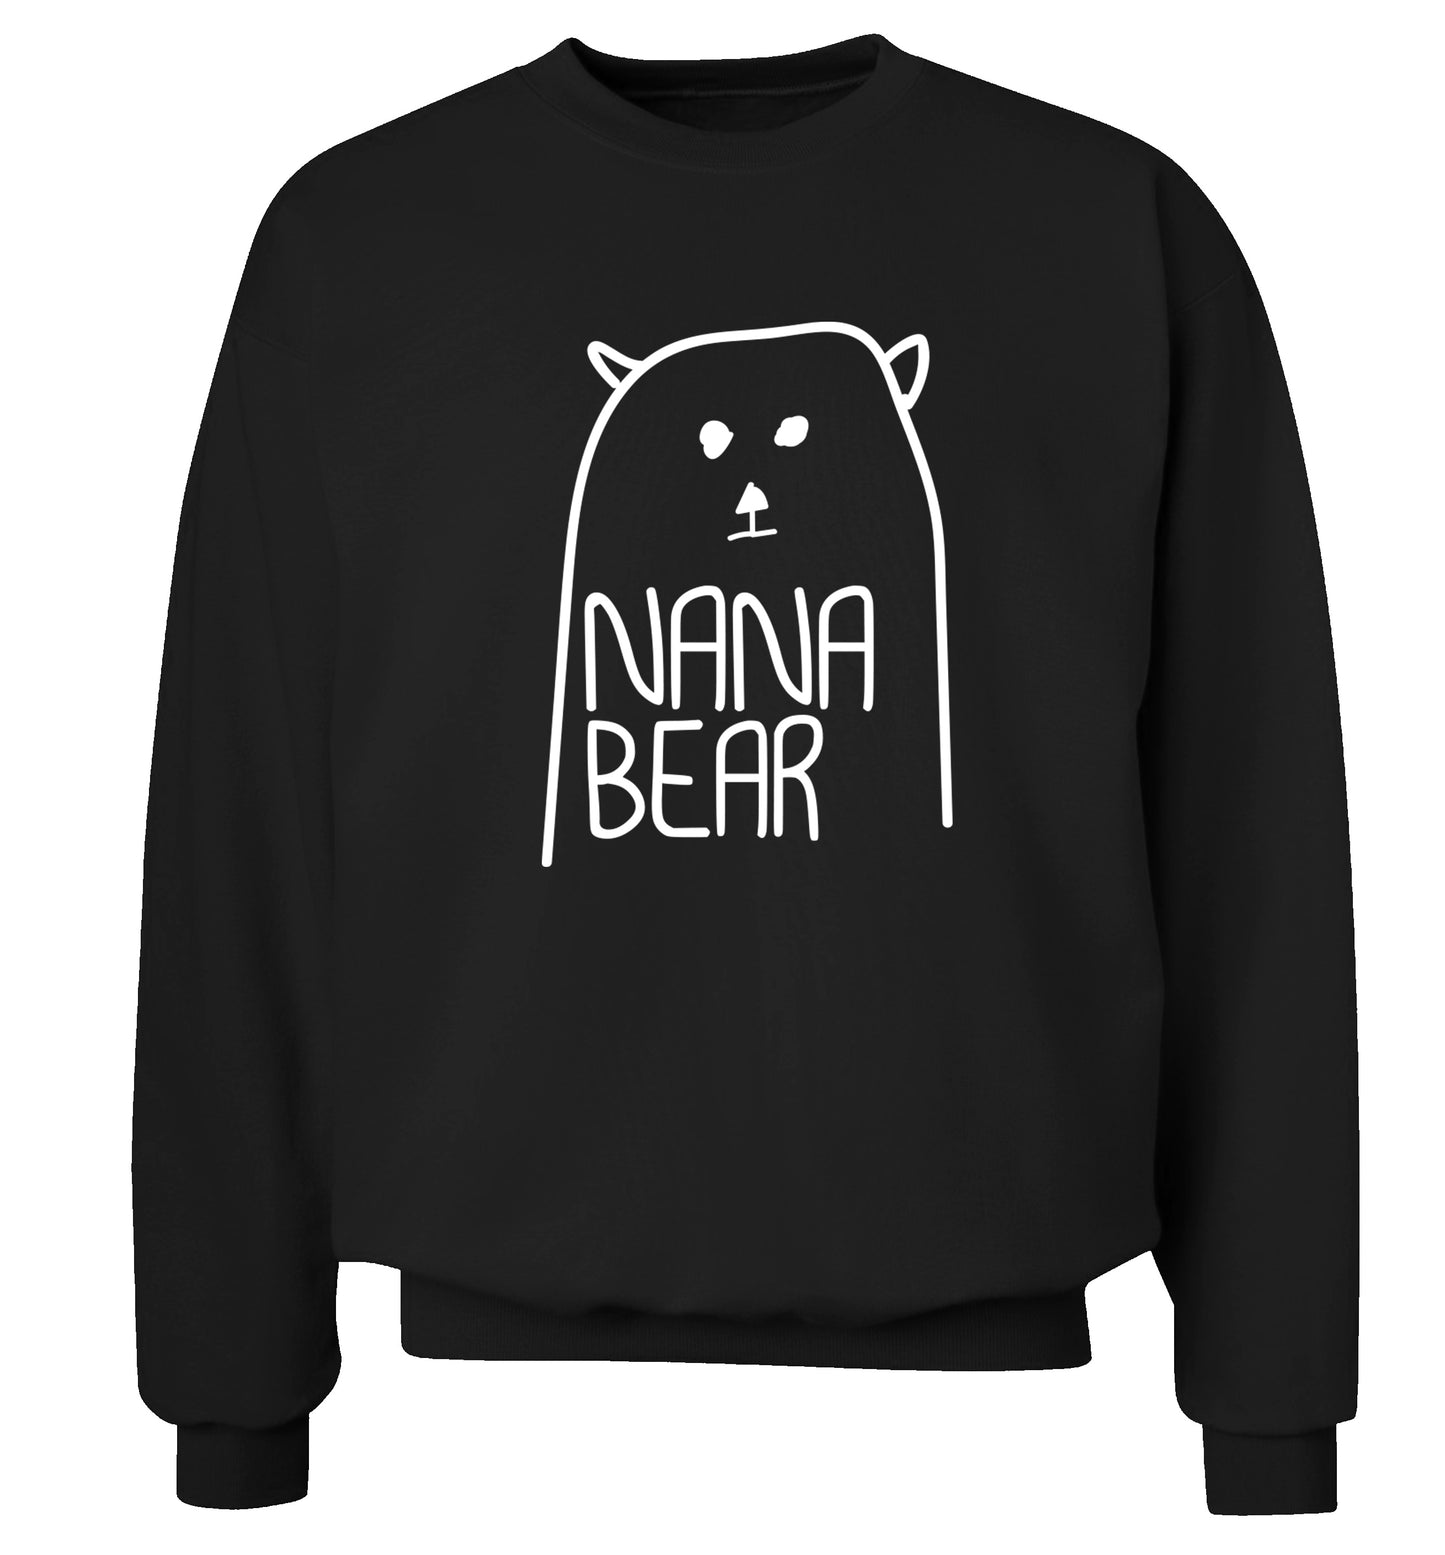 Nana bear Adult's unisex black Sweater 2XL